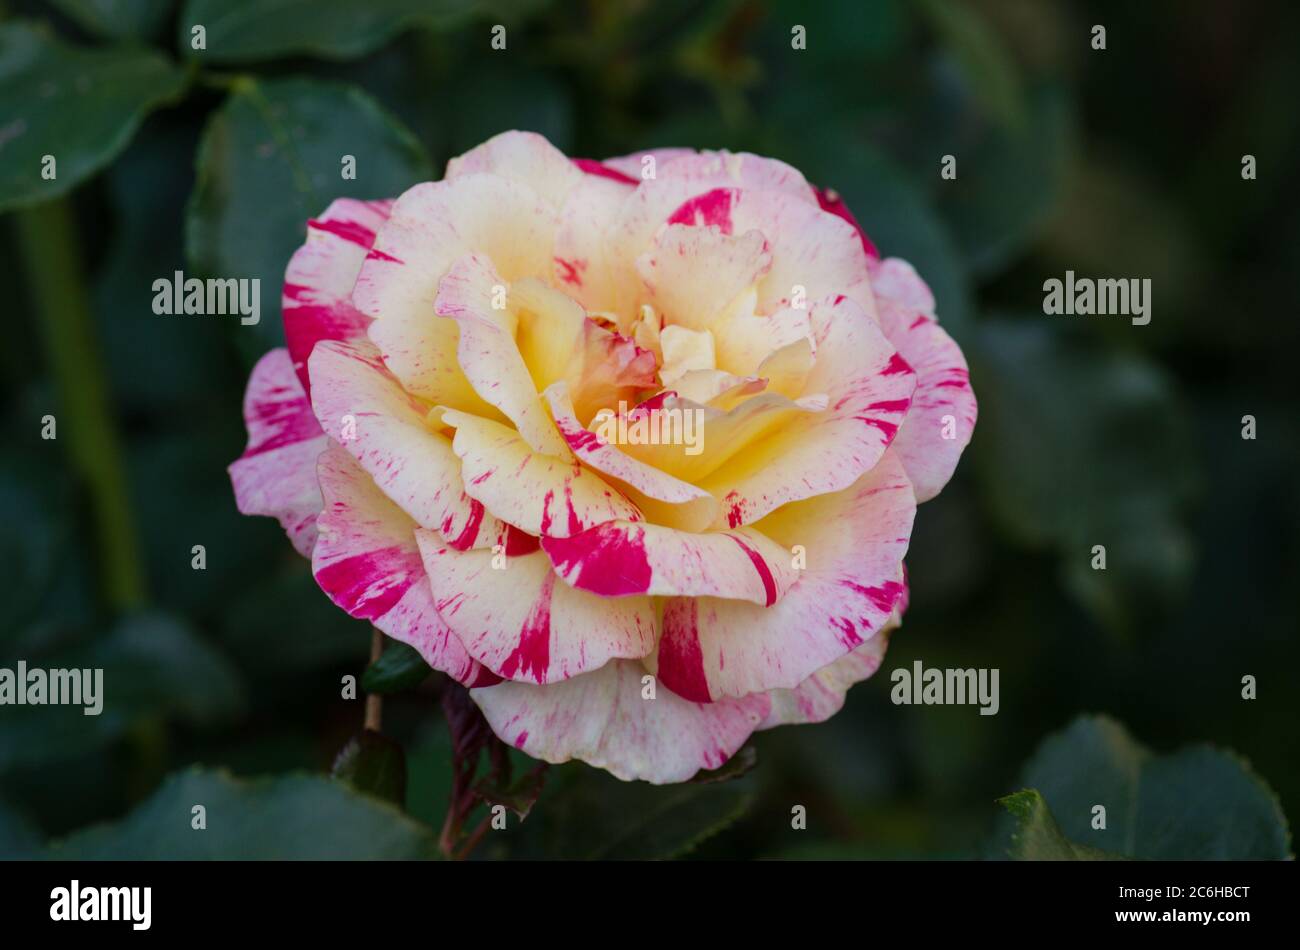 Camille Pissarro roses grows in the garden Stock Photo